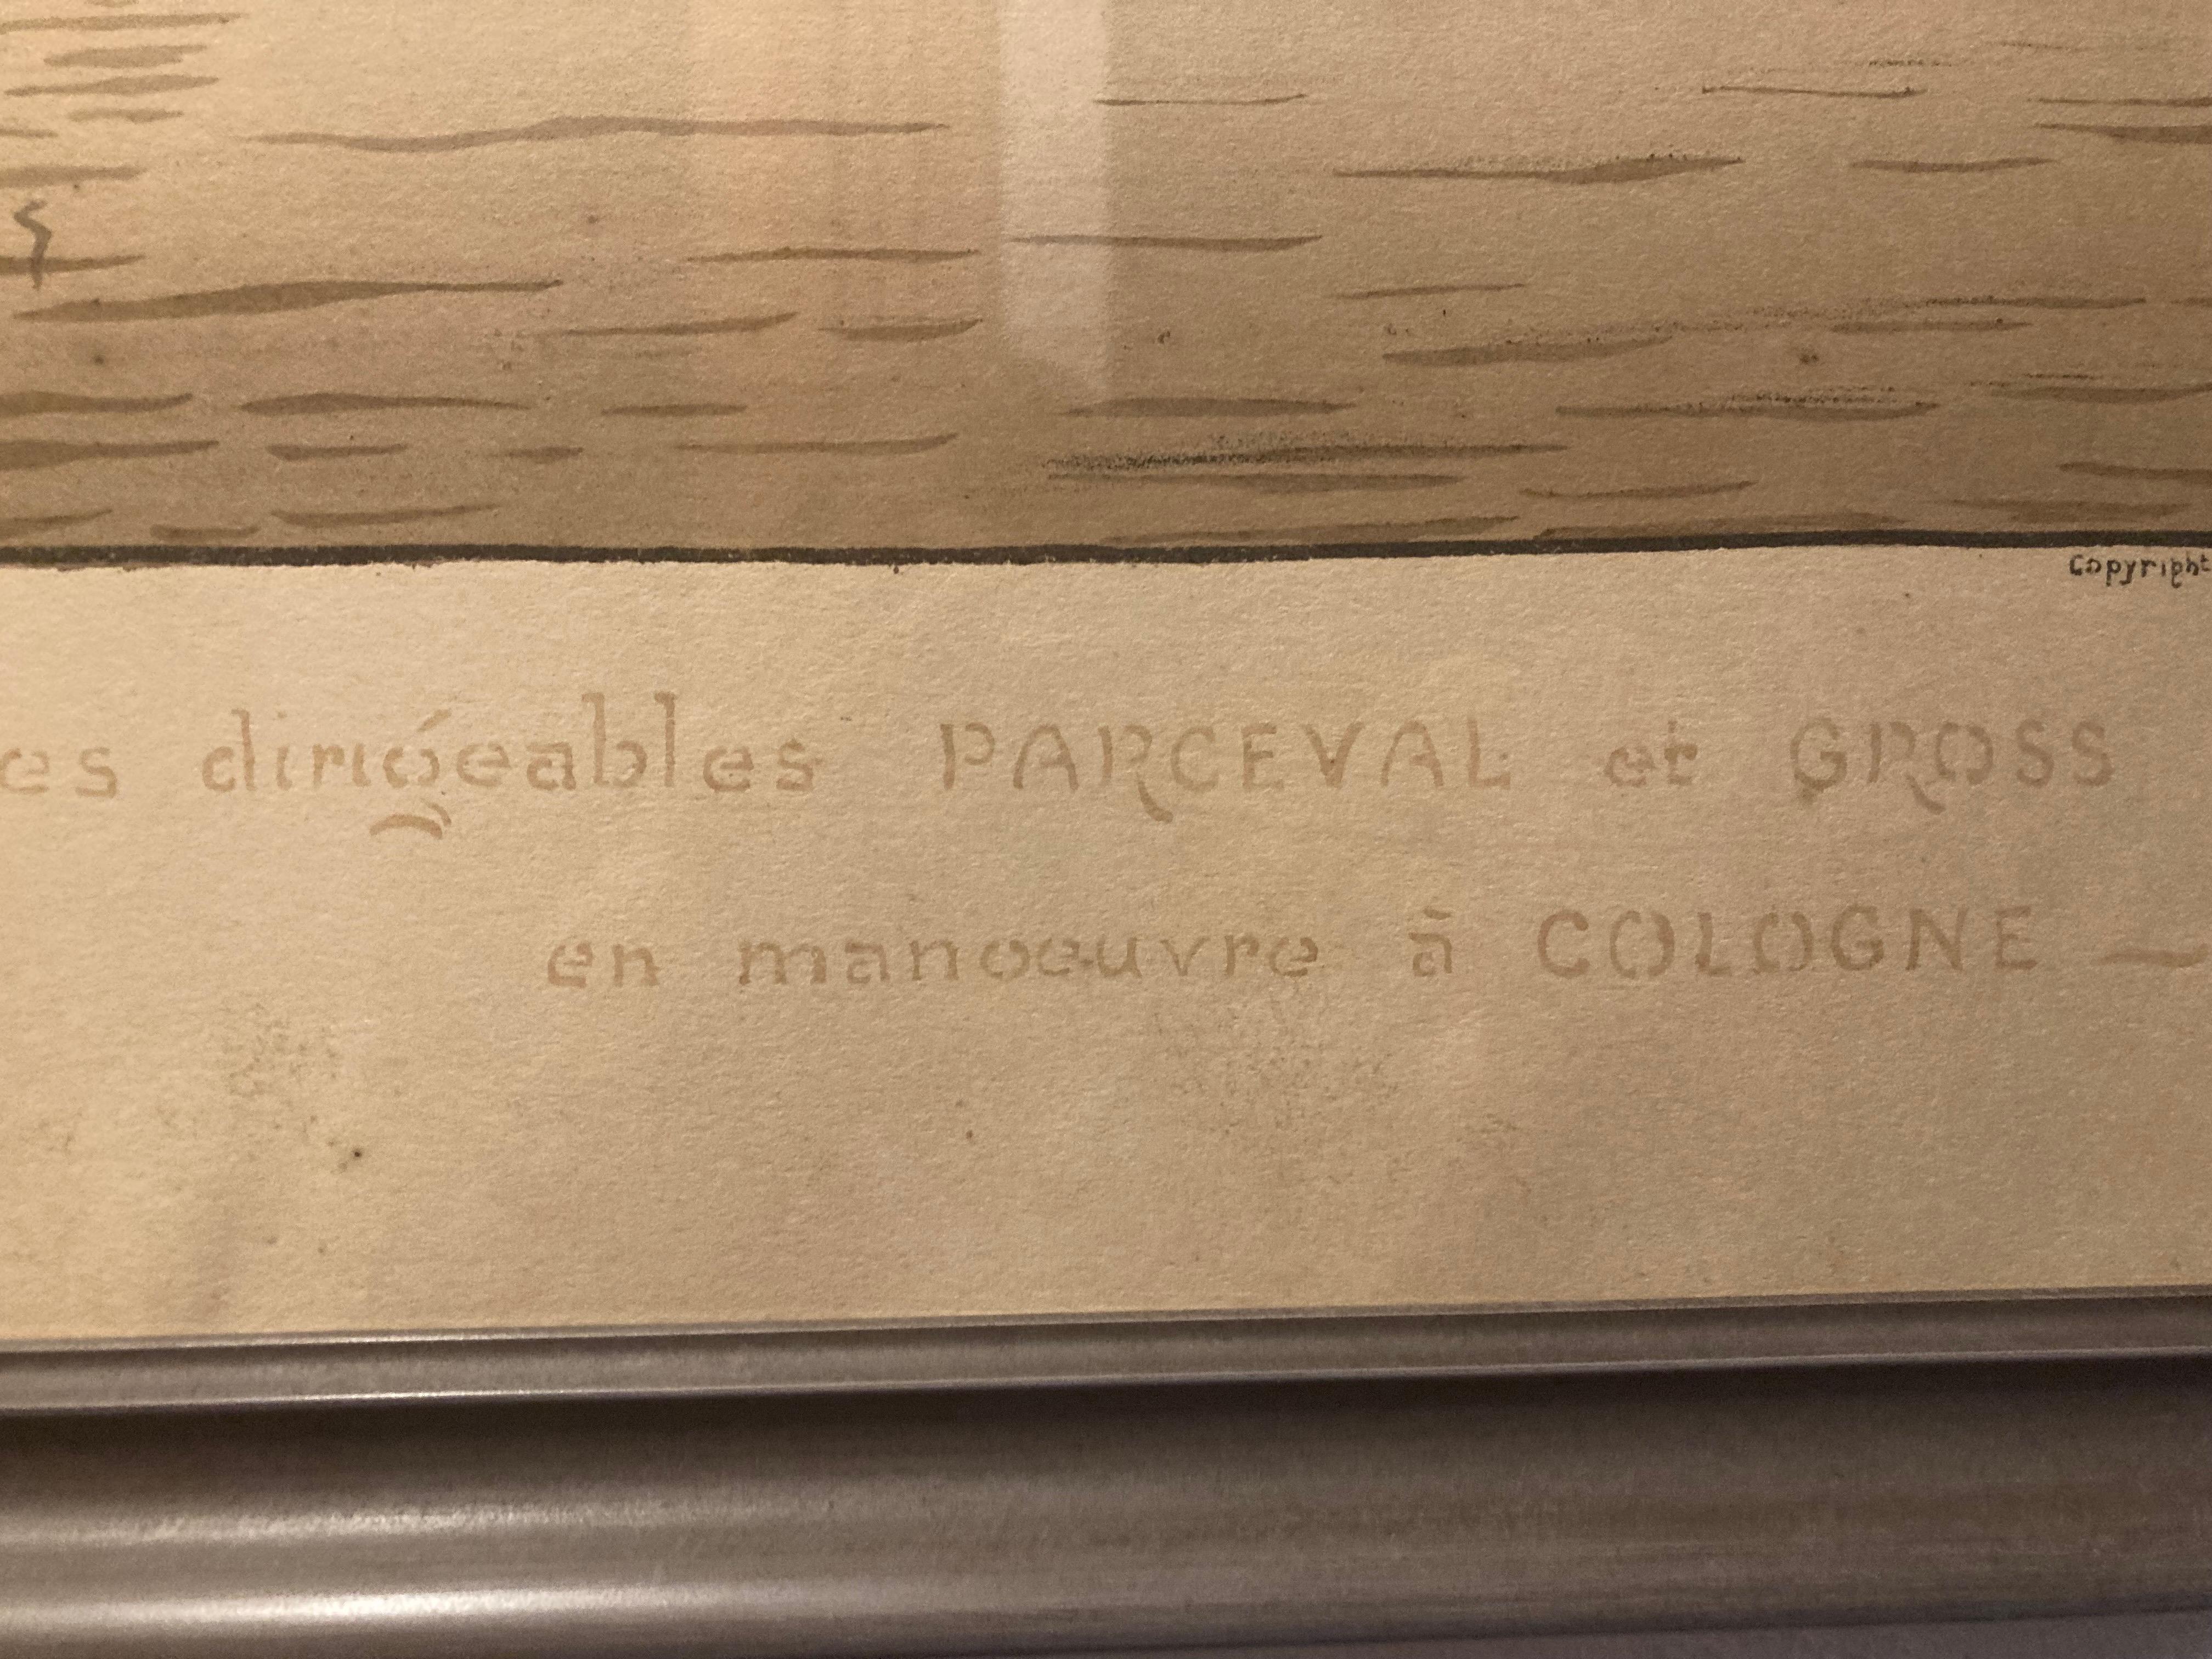 French Art Nouveau stone litograph 